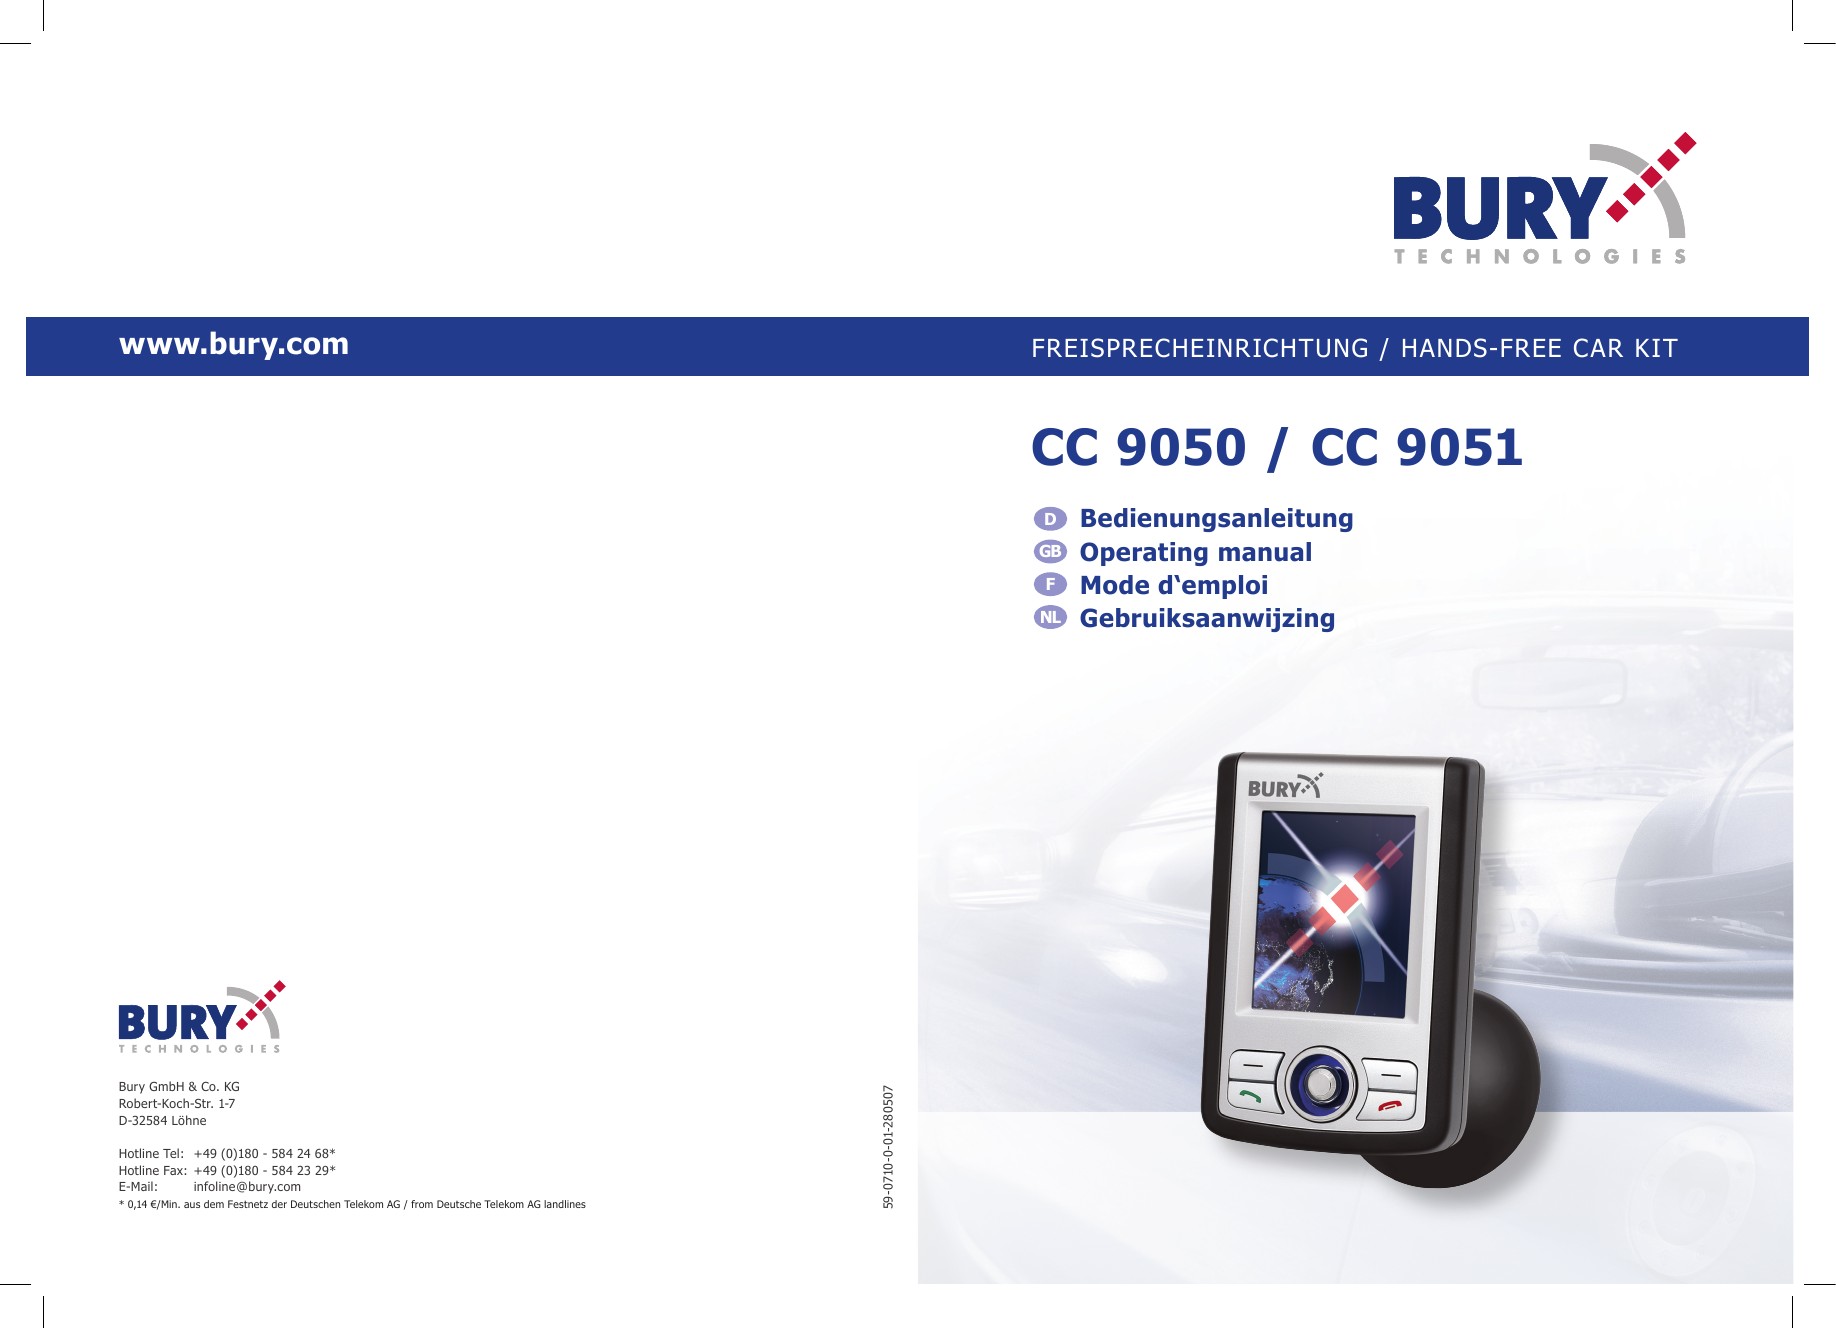 Bury Car Kit Wiring Diagram Cc9040 51 Bluetooth Handsfree Carkit User Manual Bury Gmbh &amp; Co Kg